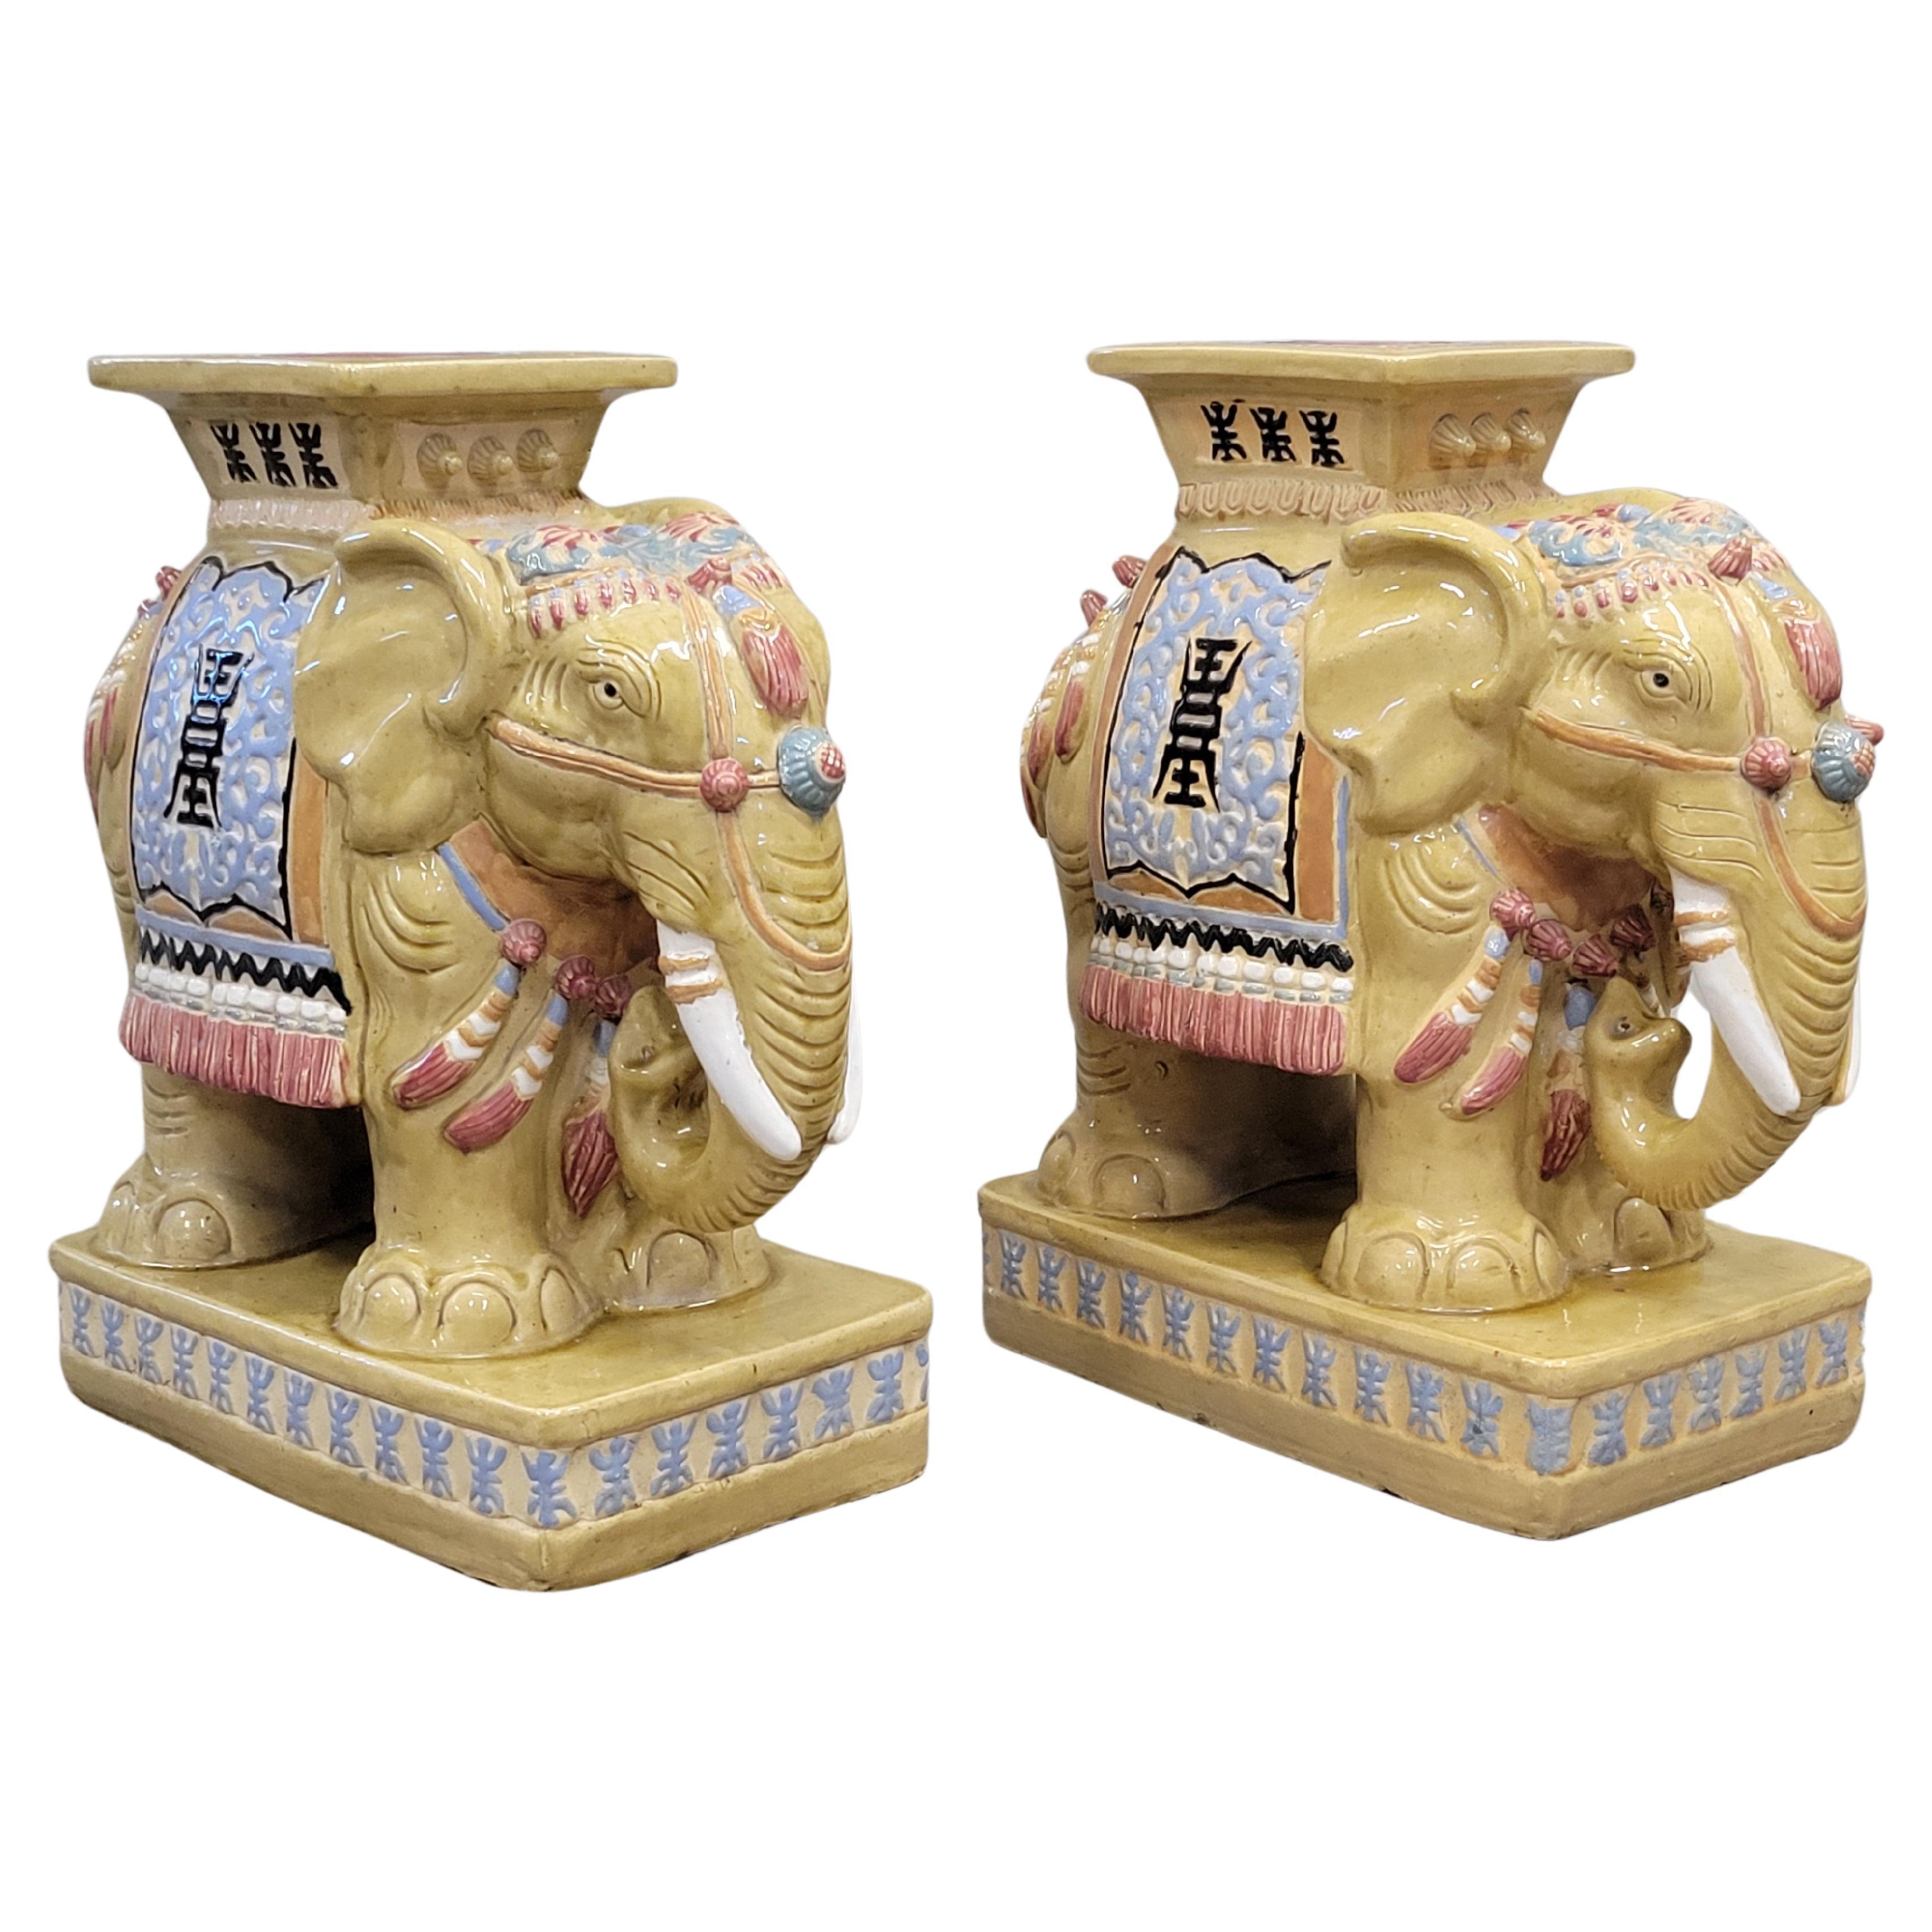 Vintage Ceramic Elephant Garden Stools - a Pair